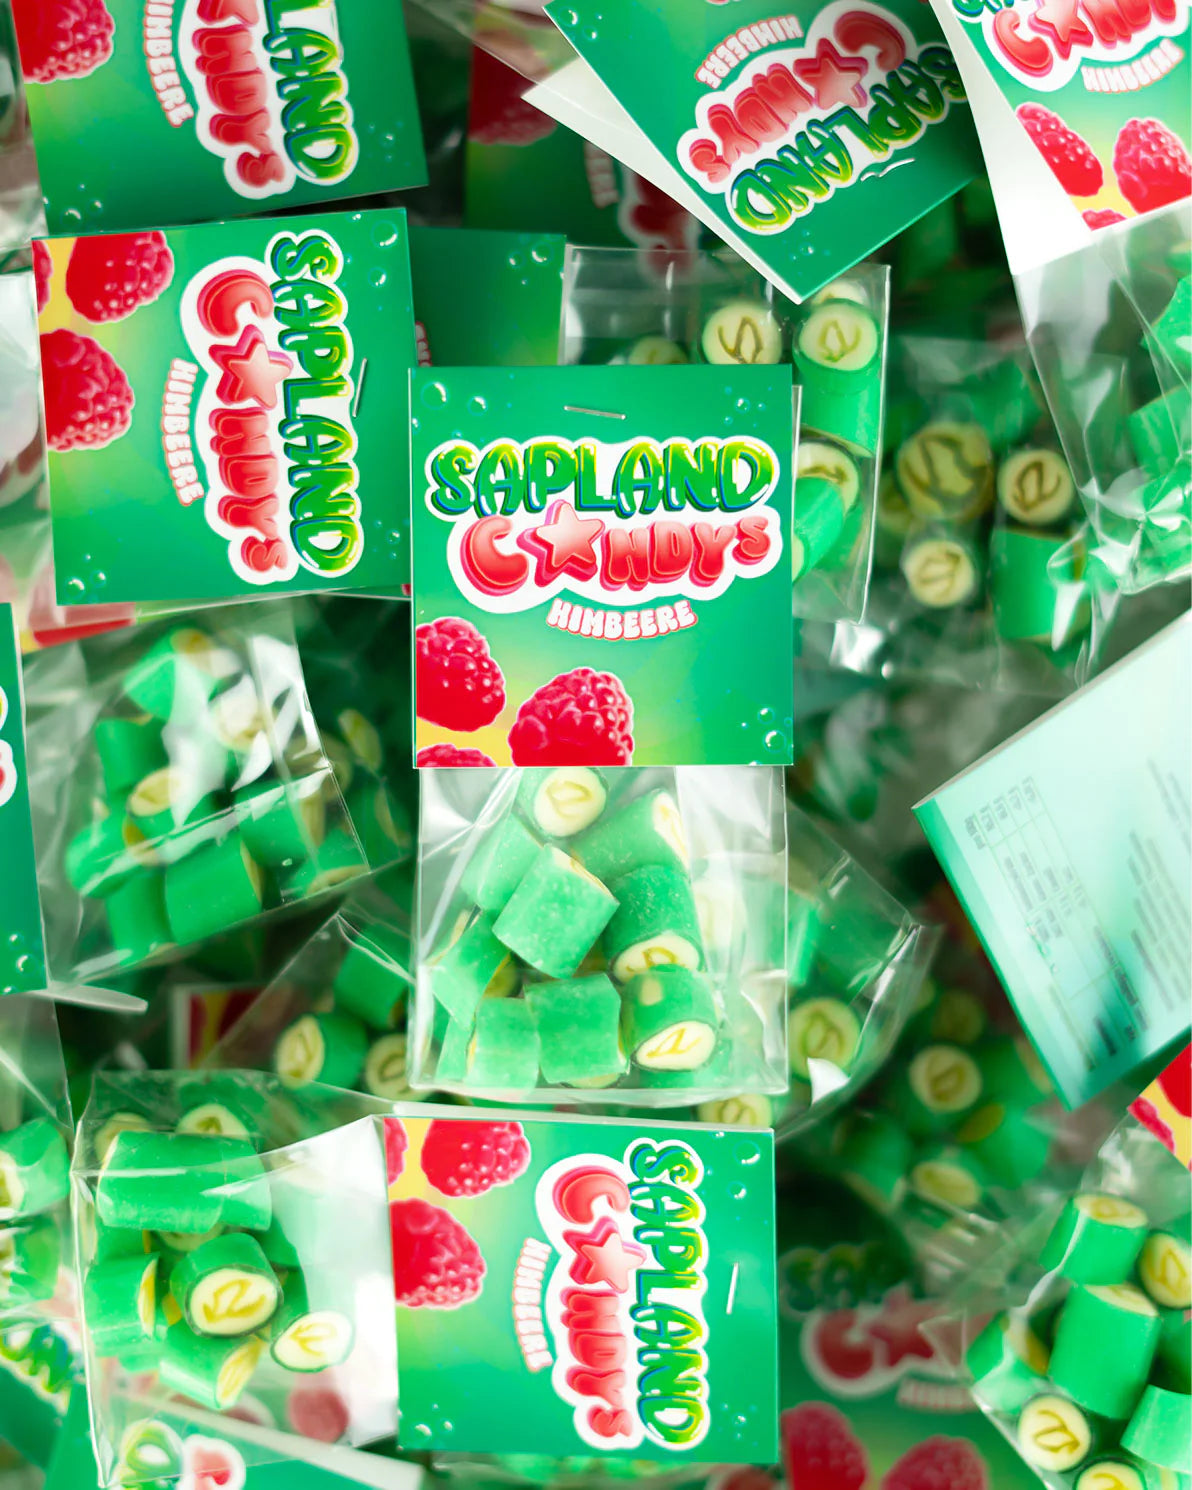 Sapland Candys